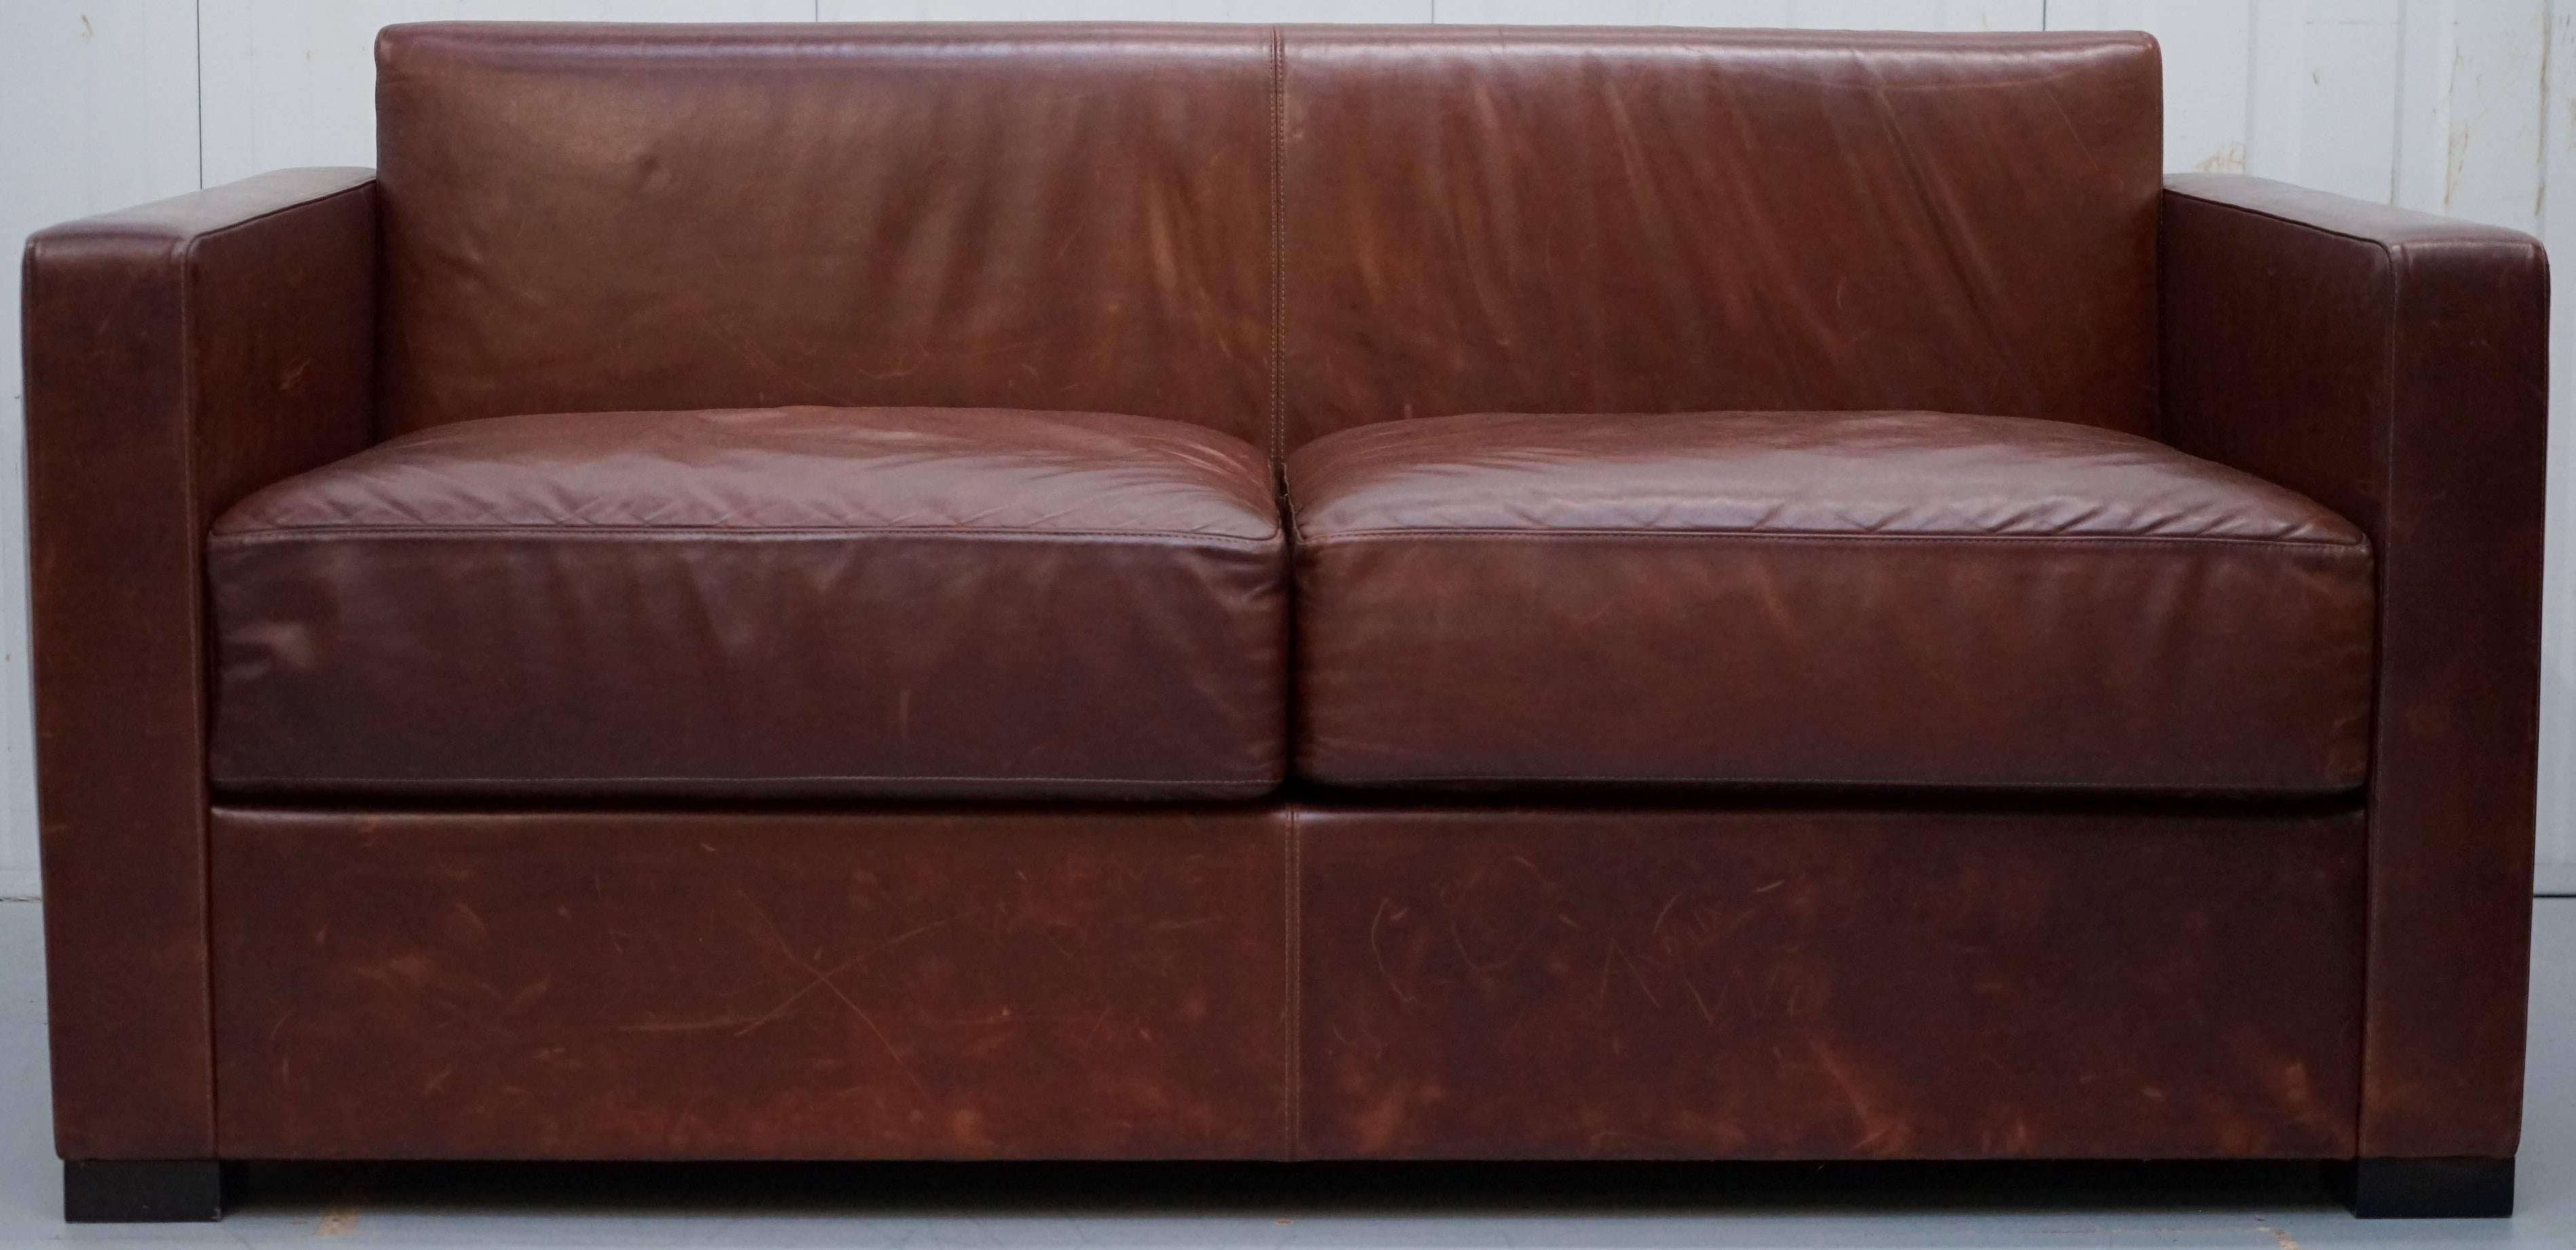 Modern Poltrona Frau Linea a Two-Seat Sofa by Peter Marino Brown Heritage Leather